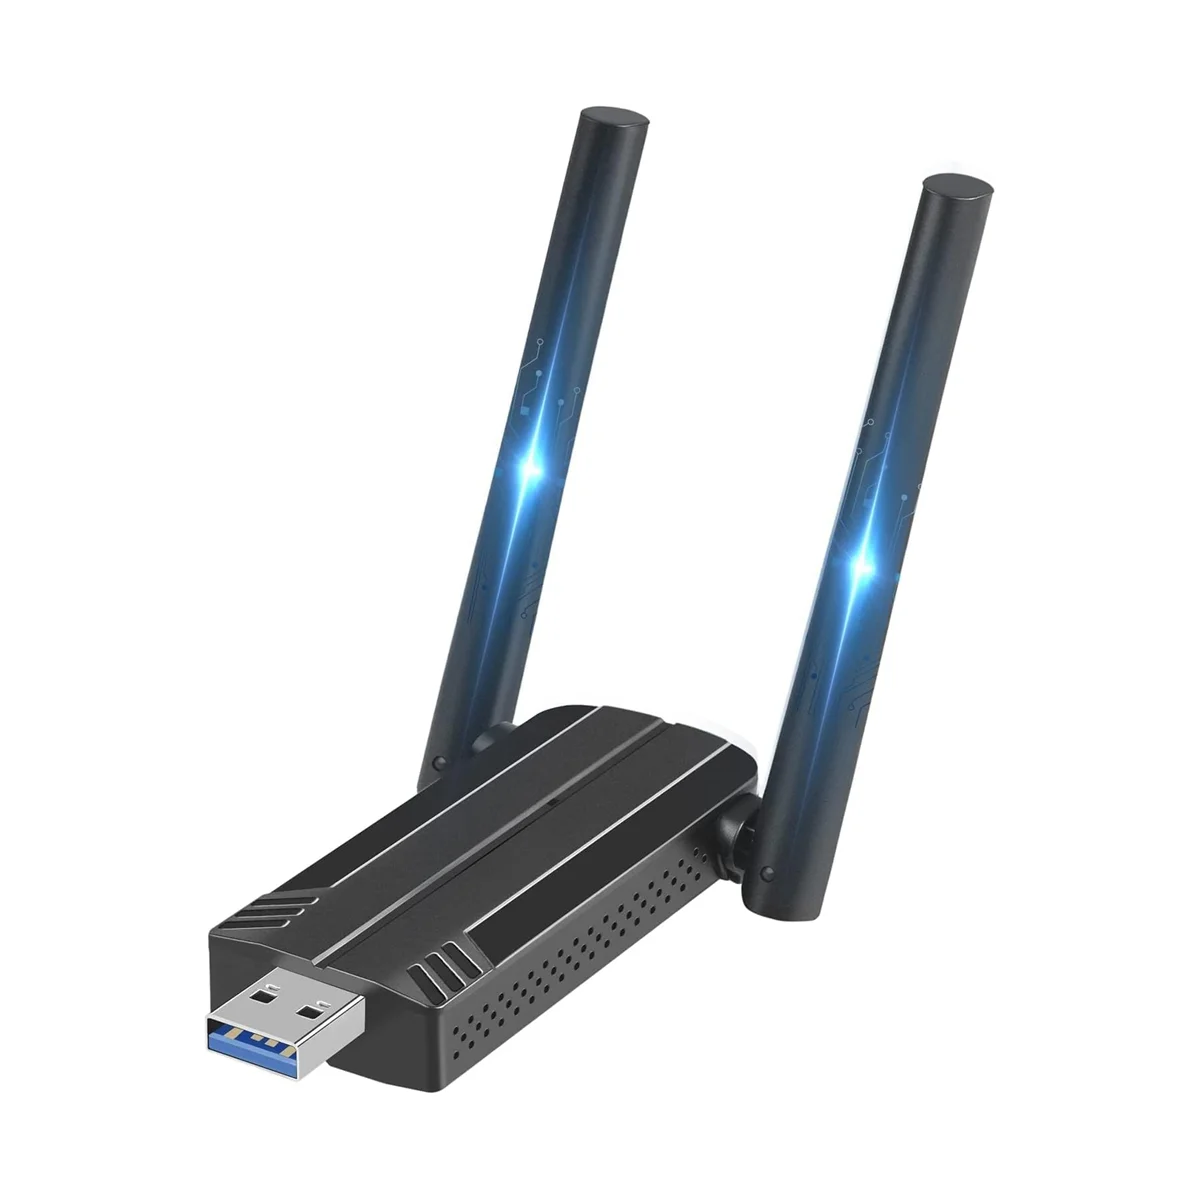 AX1800M USB WiFi Адаптер для ПК, USB 3.0 WiFi Ключ, Двухдиапазонный беспроводной адаптер 2.4 G / 5G для настольного ПК